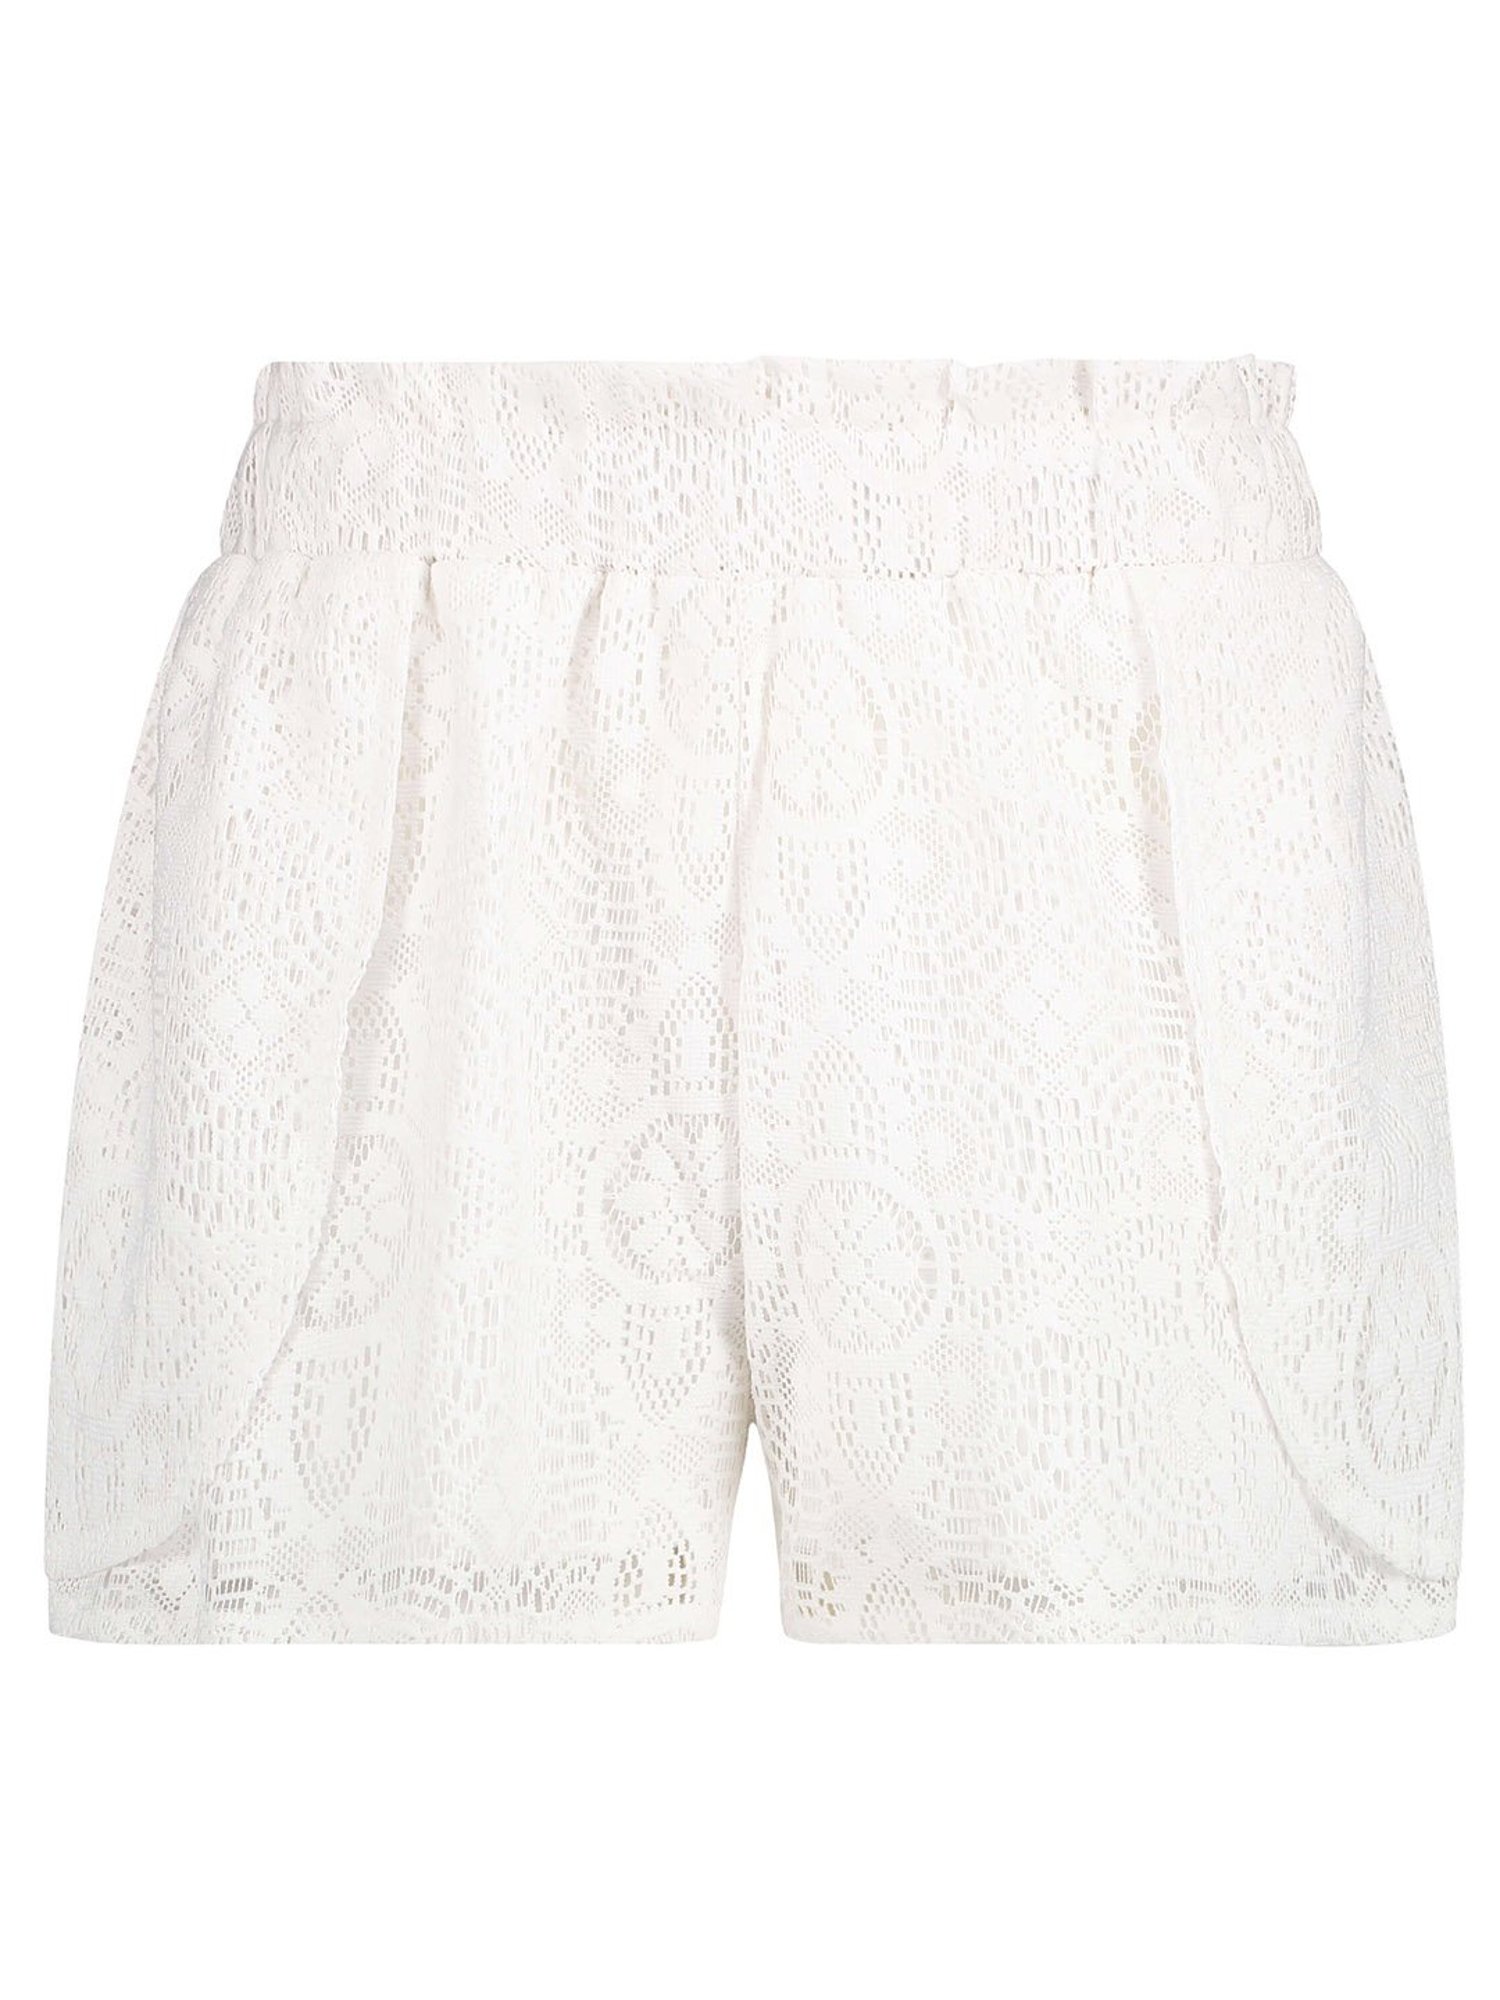 Lace Shorts for €8.5 - Pajama Pants - Hunkemöller